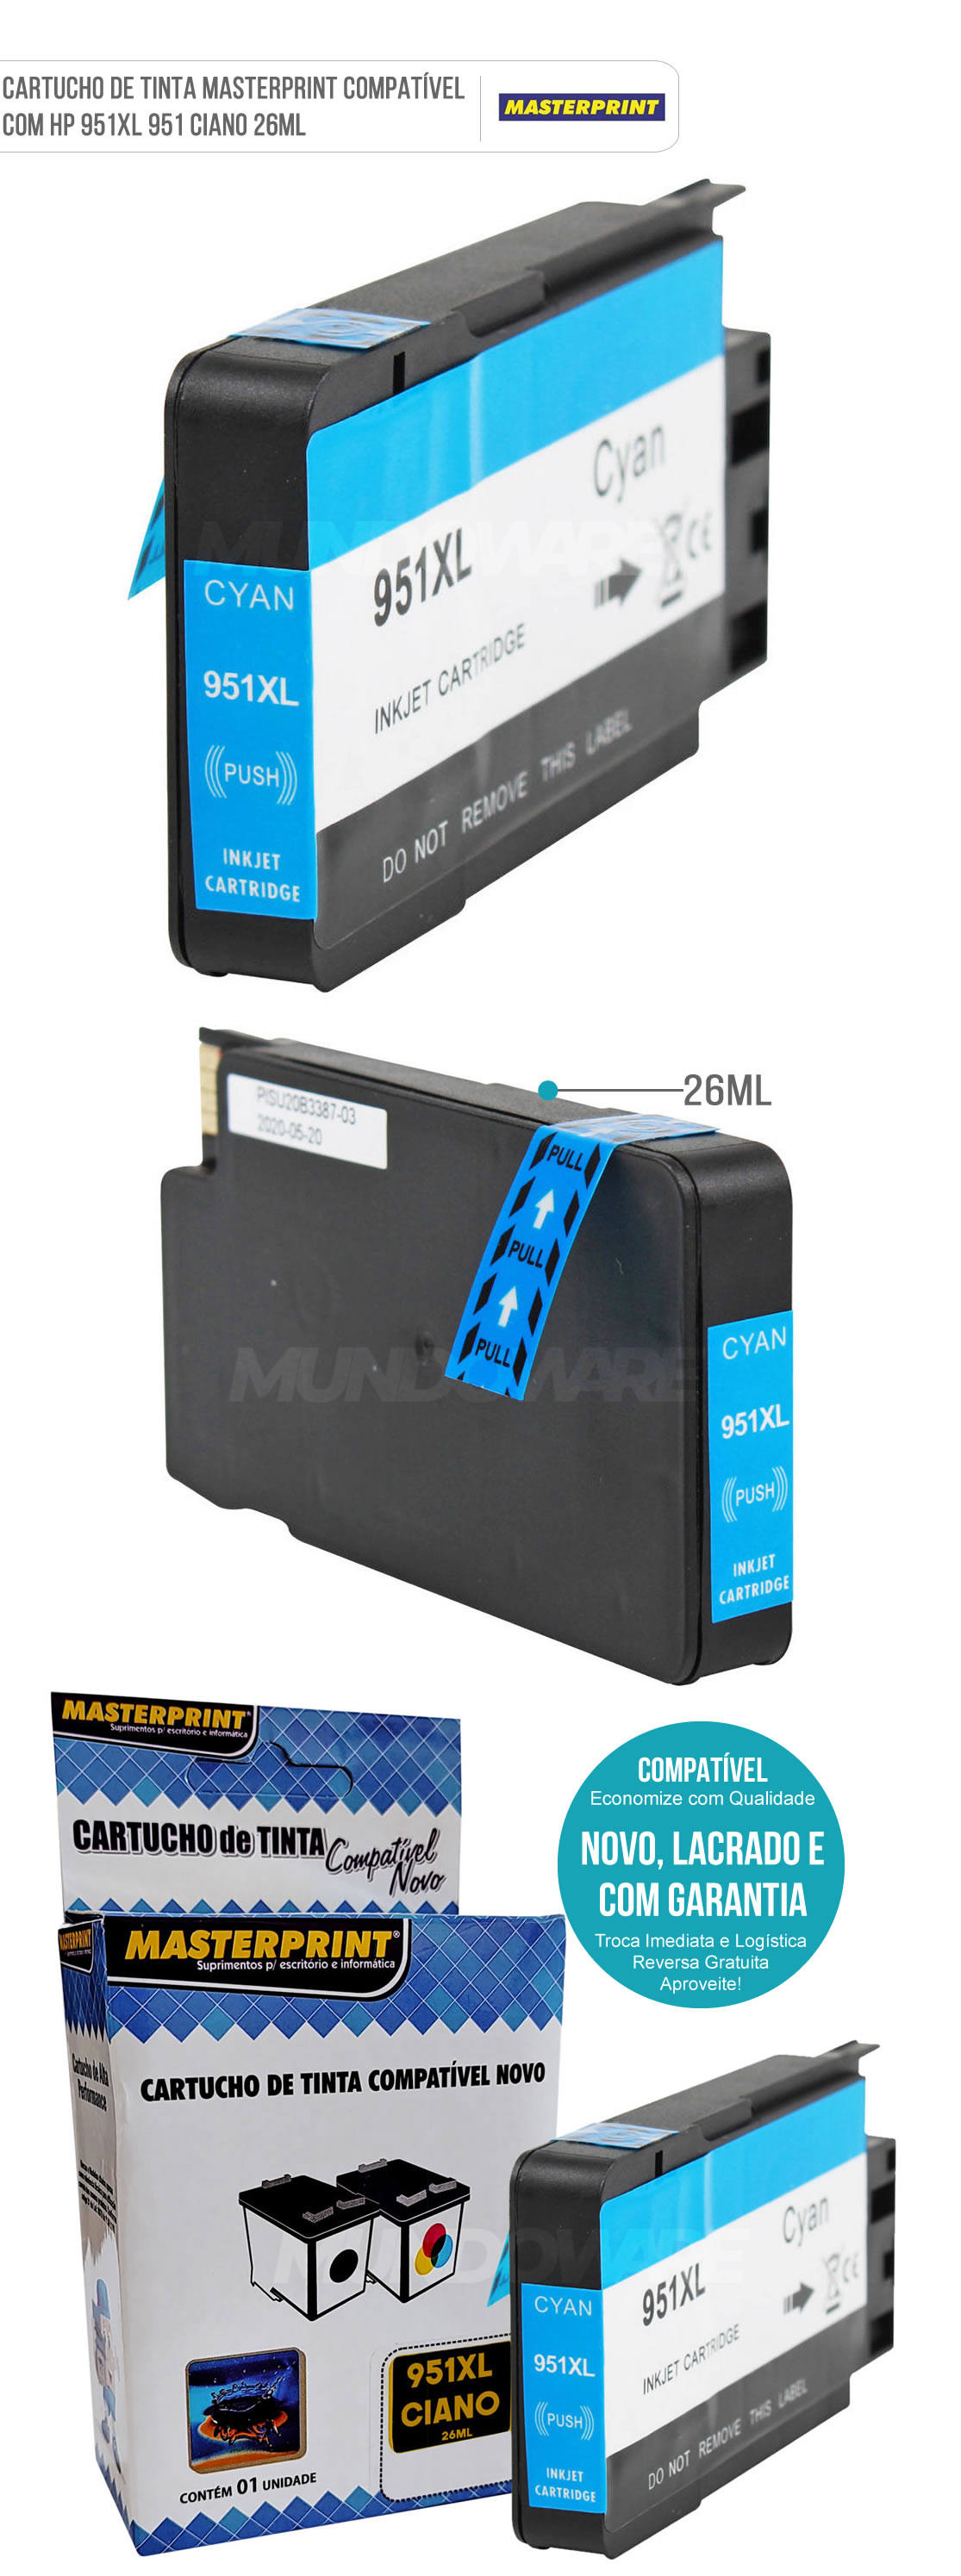 Cartucho de Tinta Masterprint Compatível com 951xl 951 para HP Officejet Pro 8600 8600 Plus 8600W 8620 8610 Ciano 26ml